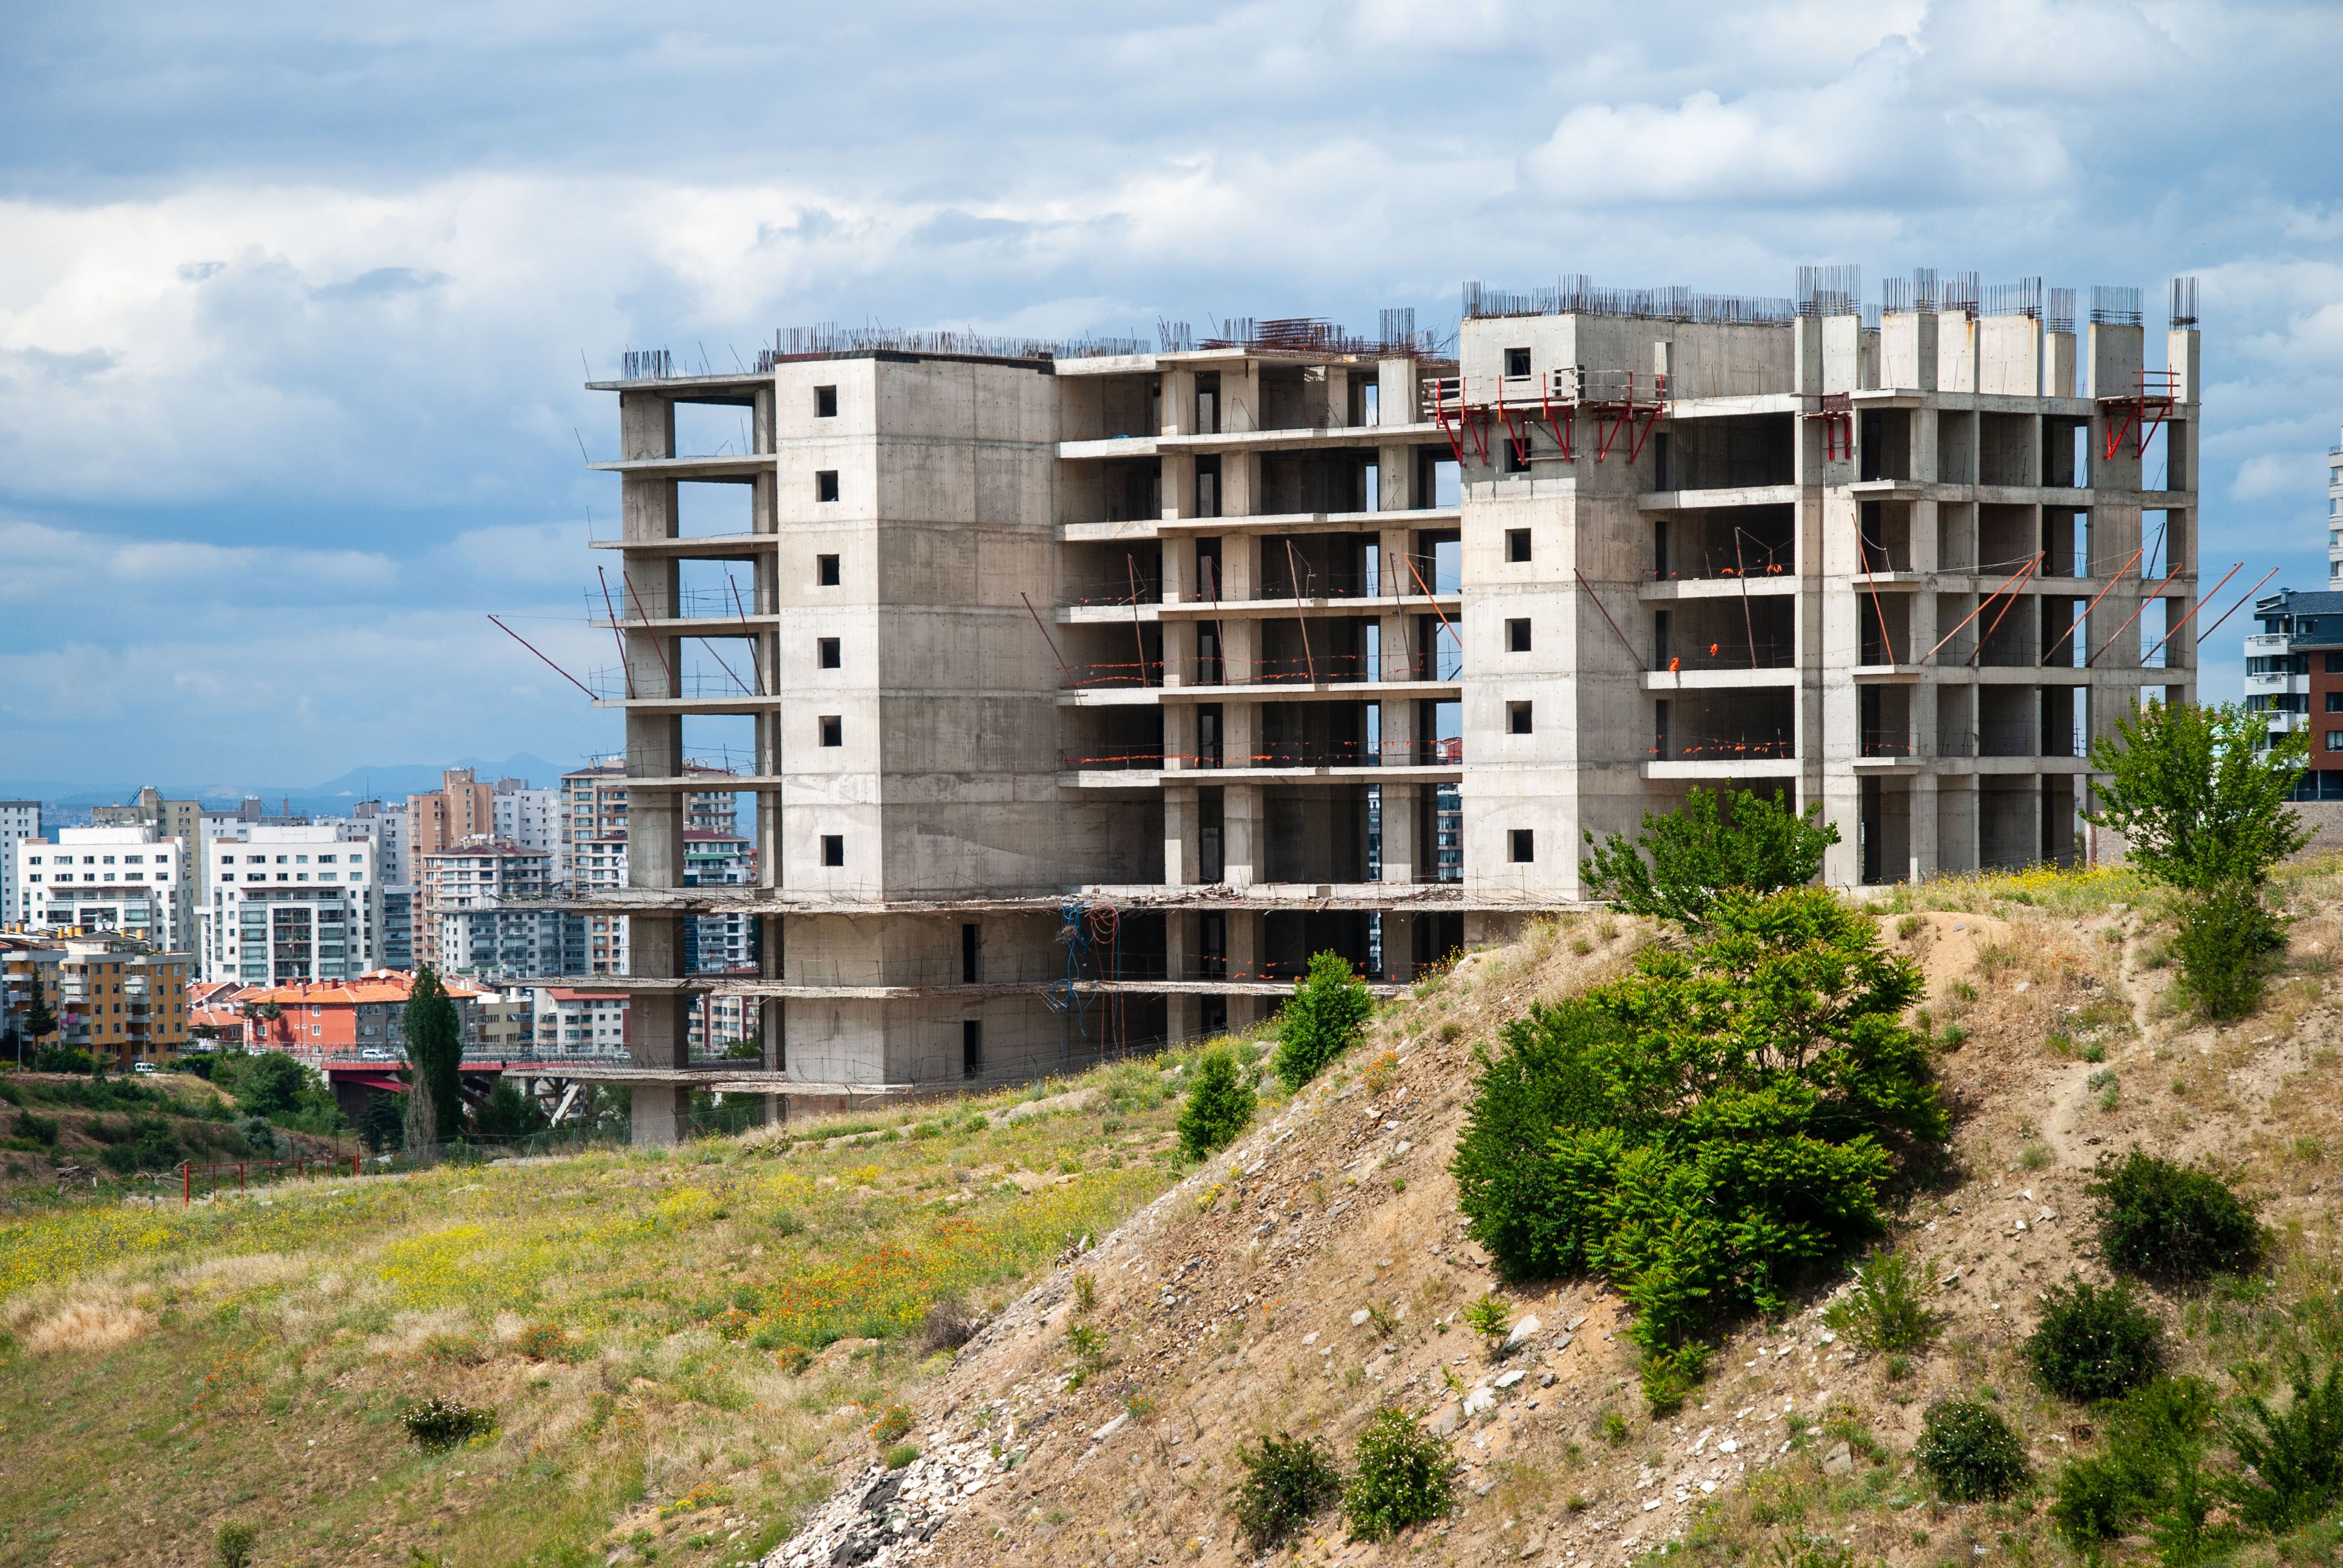 New apartment complexes being built in Dikmen